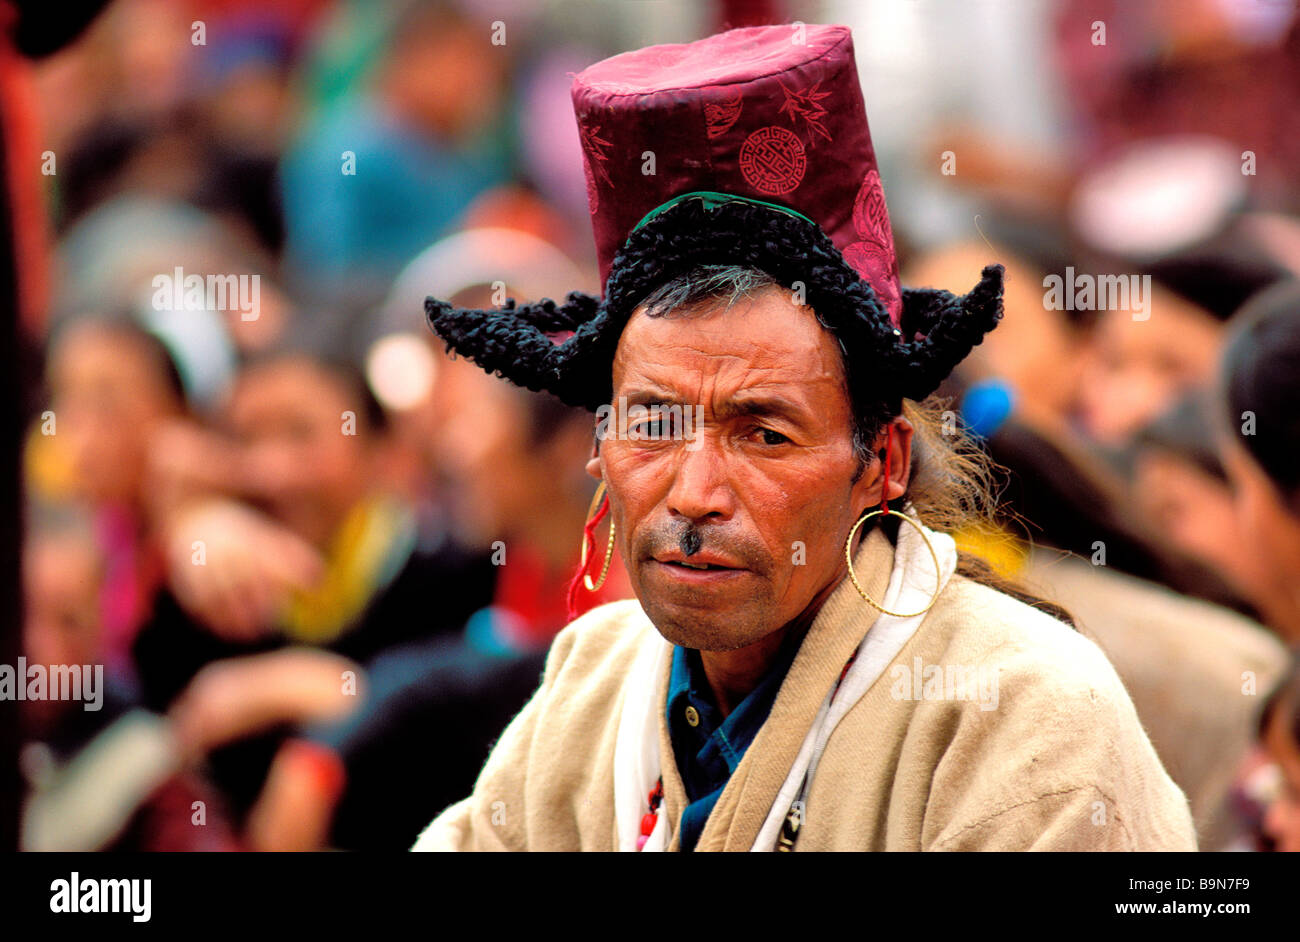 India, Jammu and Kashmir, Ladakh, man wearing tibi (traditional hat) Stock Photo